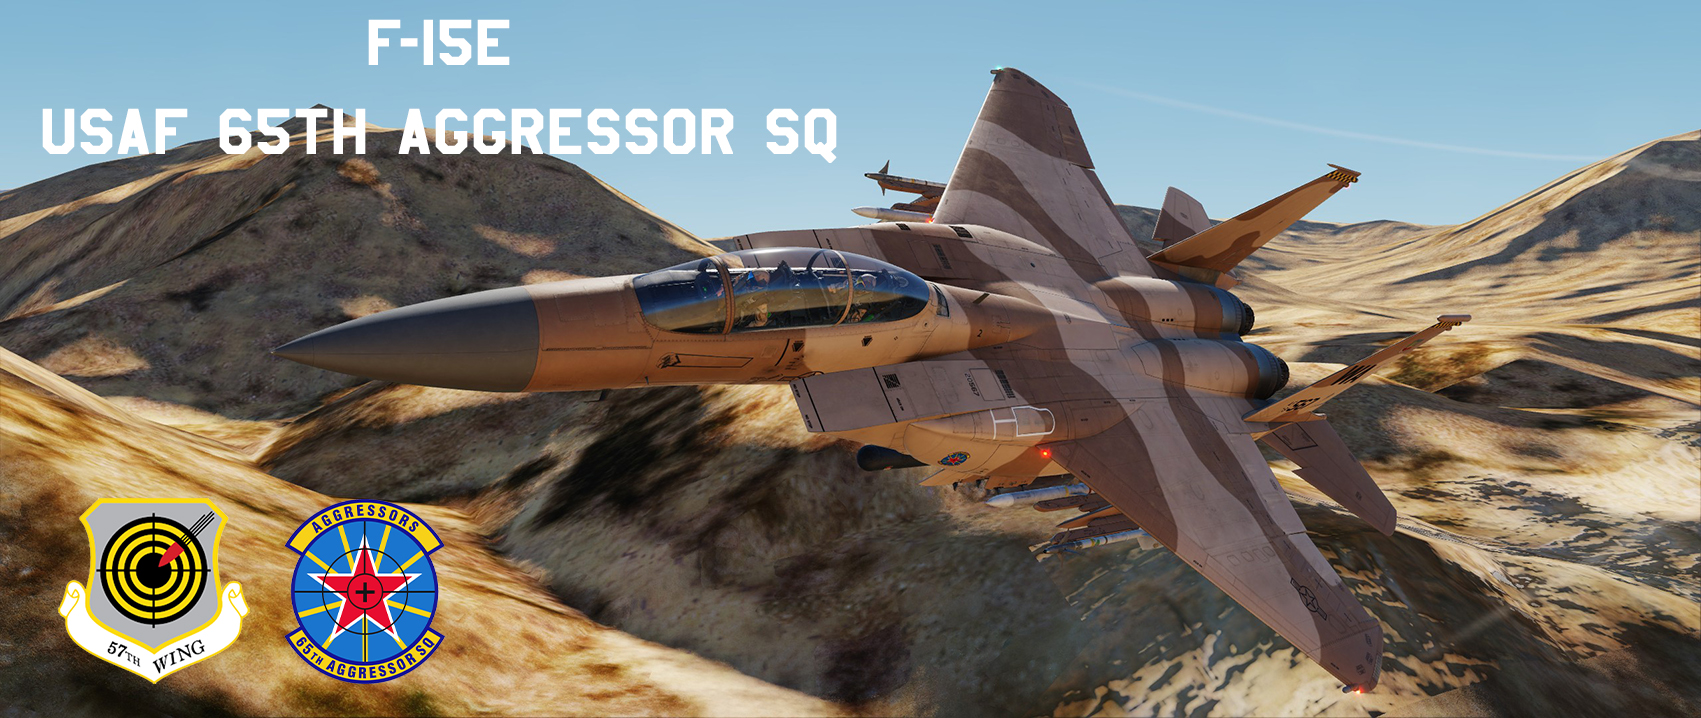 65th Squadron F-15E Aggressor "Desert" and "Blue Flanker" v3